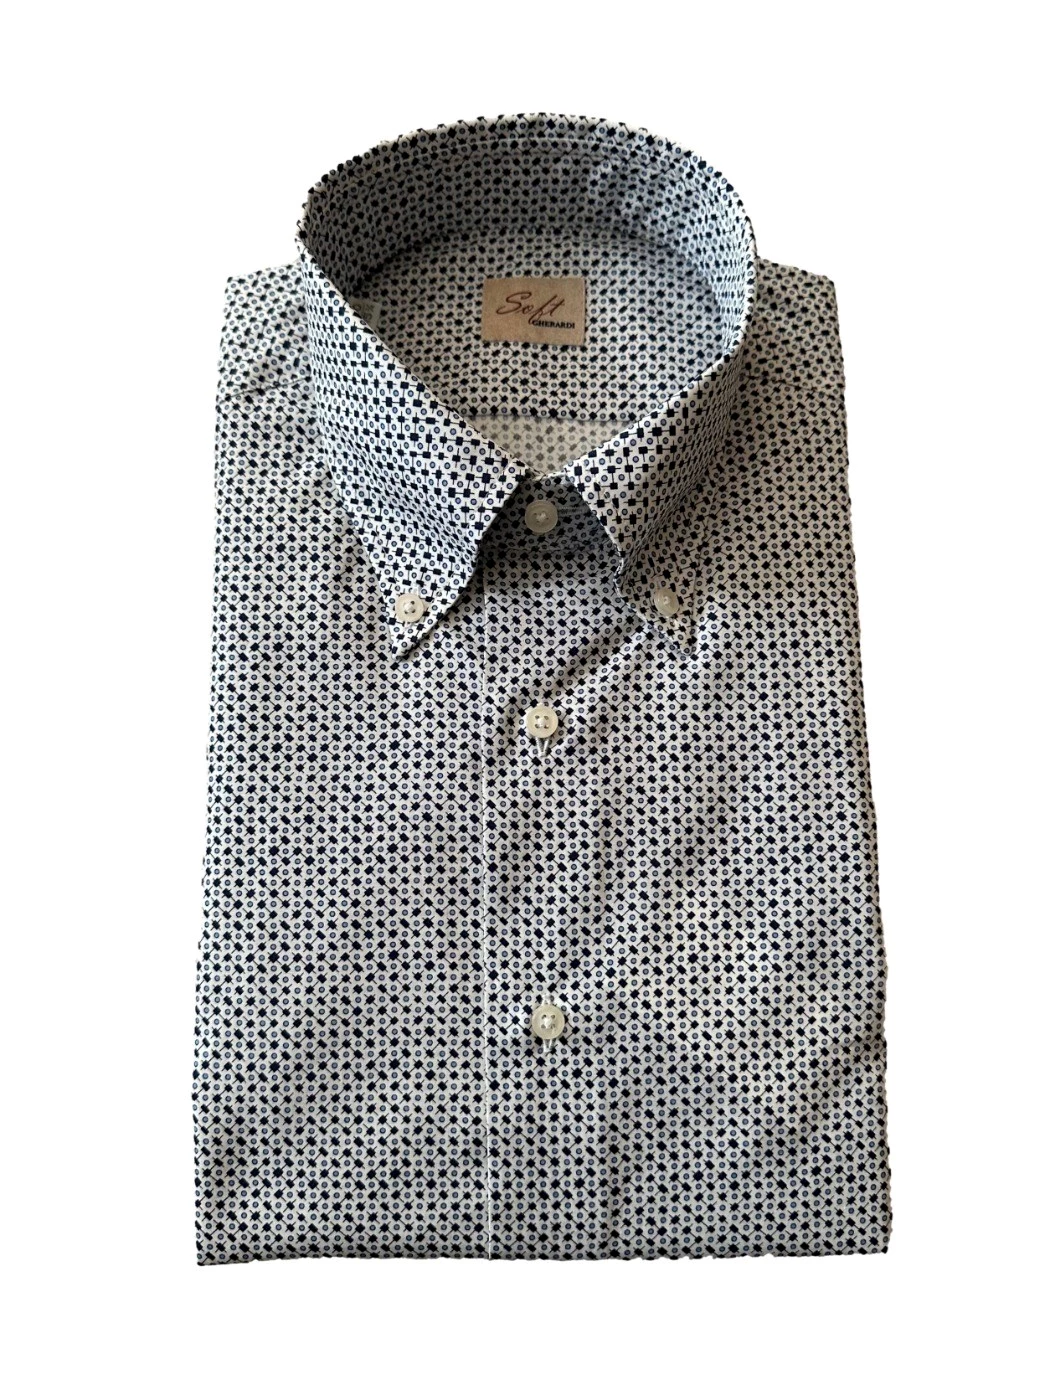 Micro patterned shirt Alessandro Gherardi